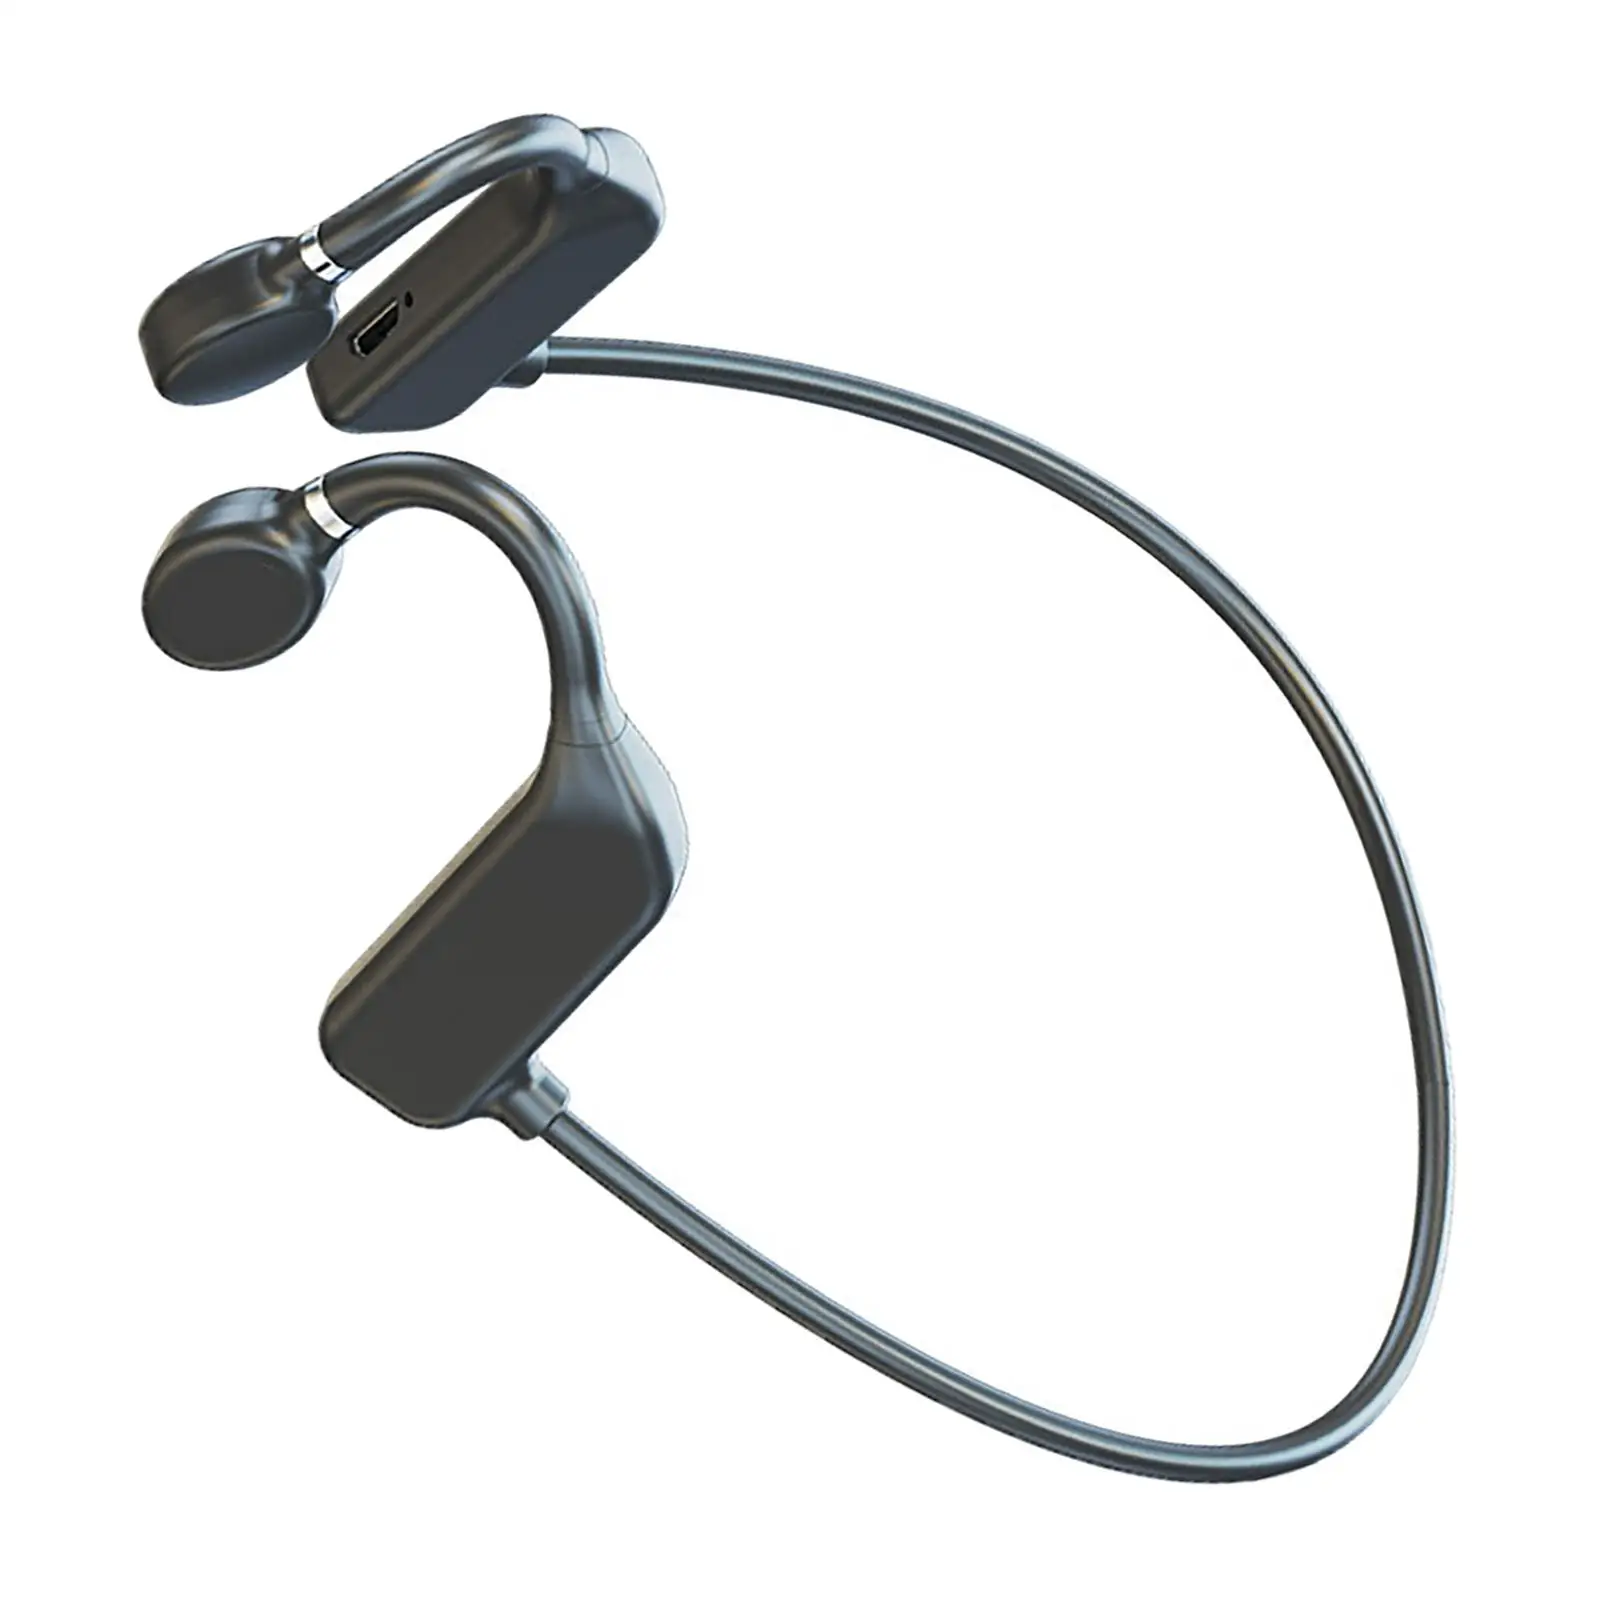 Bone Conduction Headphones Earphones Open-Ear Bluetooth 150mAh Battery Capacity for Running Cycling Sweatproof Lightweight